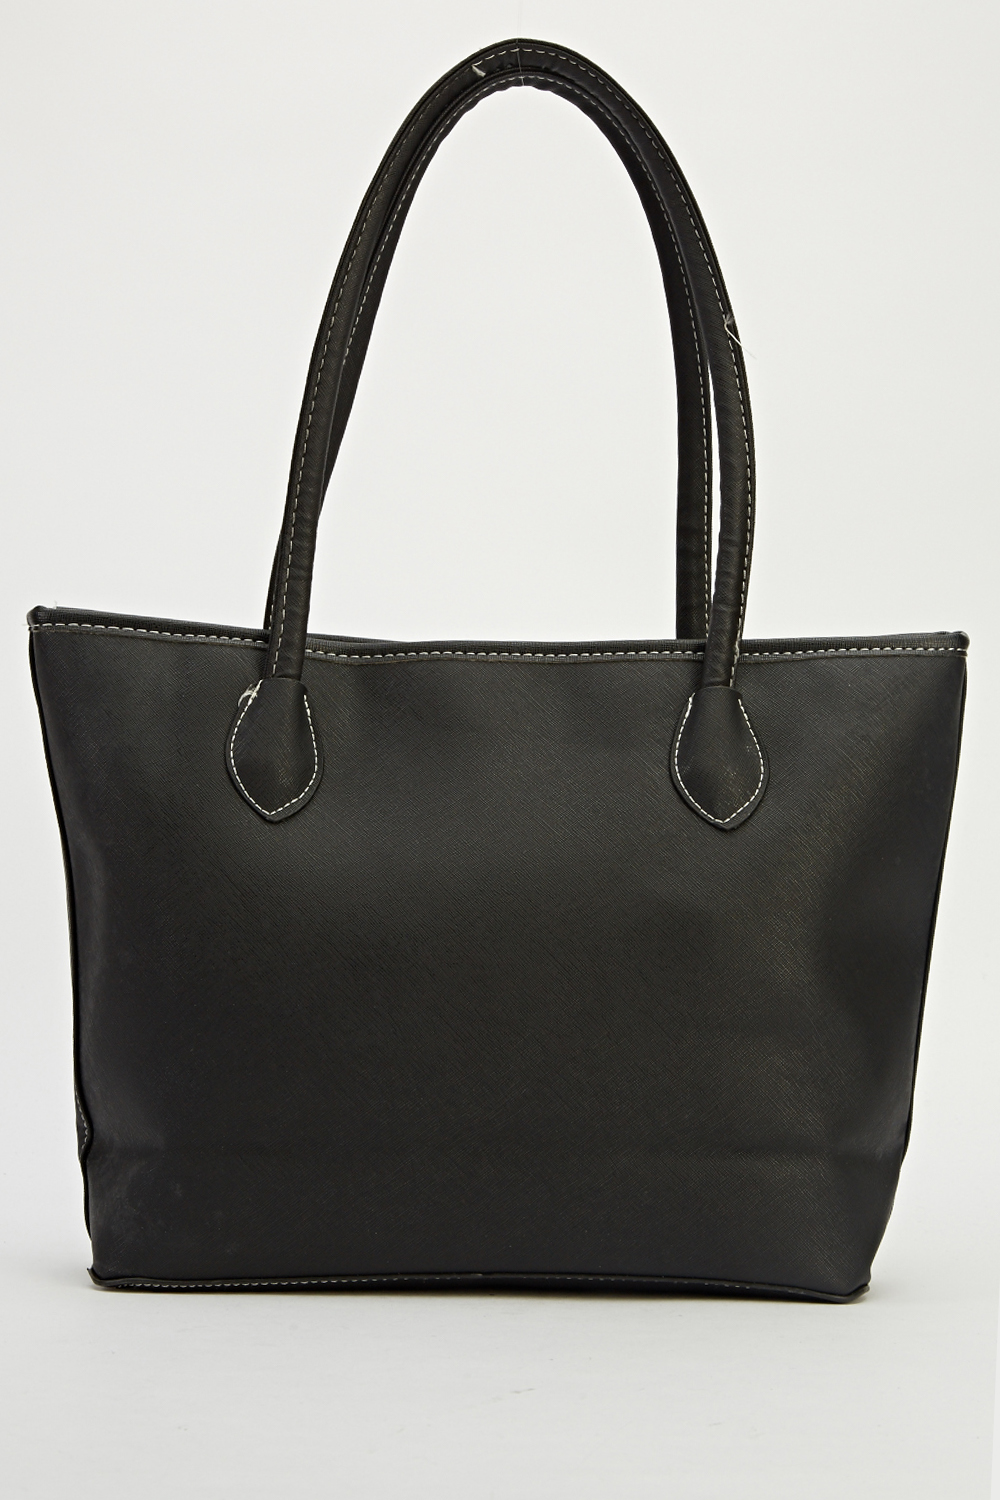 Black Large Tote Handbag - Just $6